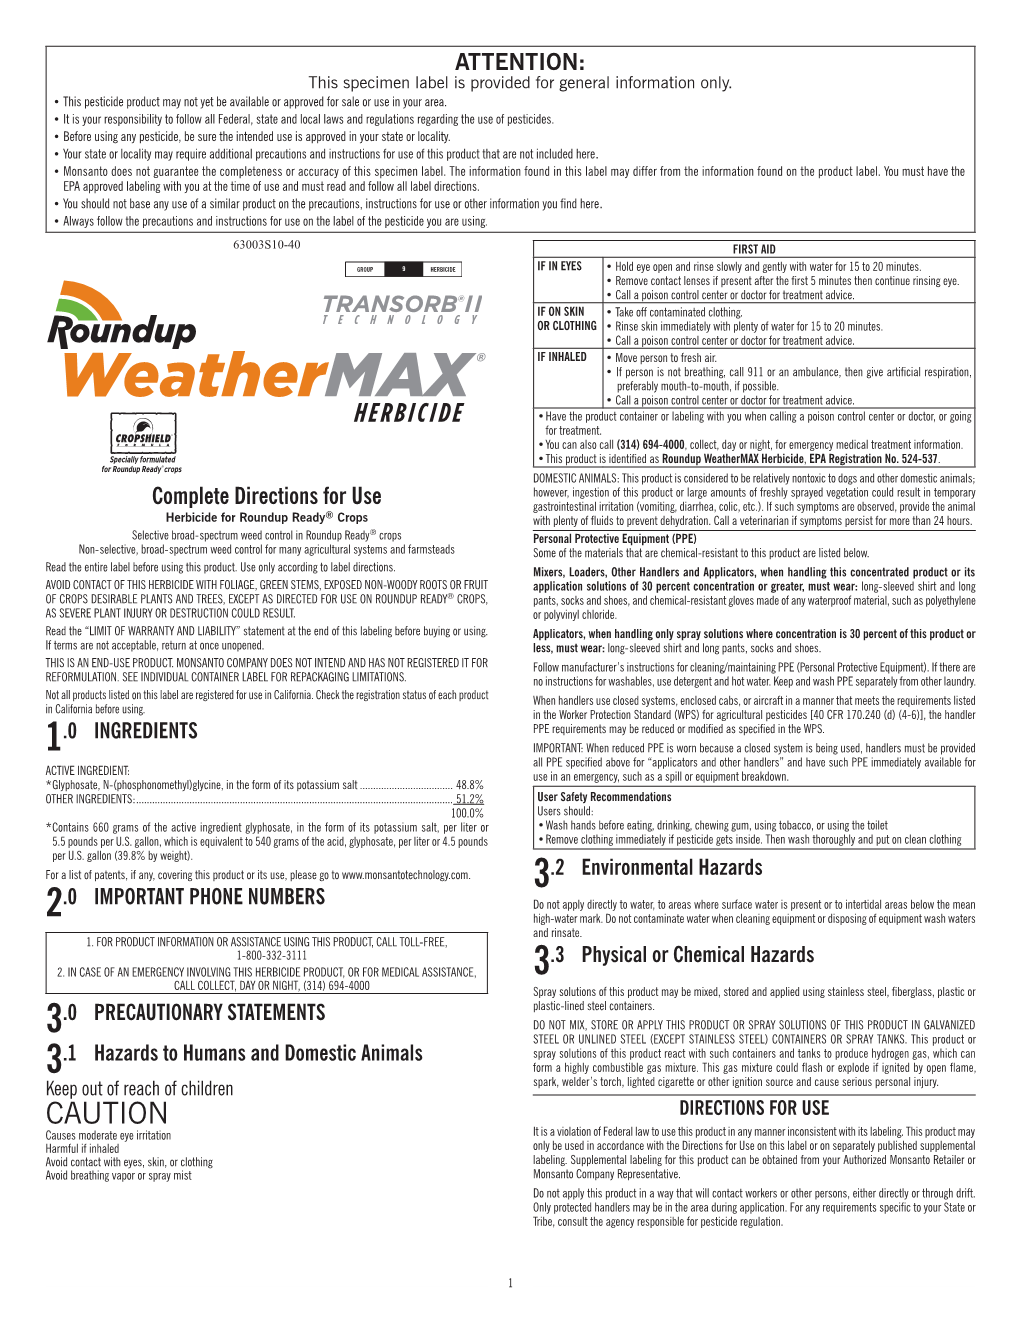 Roundup Weathermax Herbicide, EPA Registration No